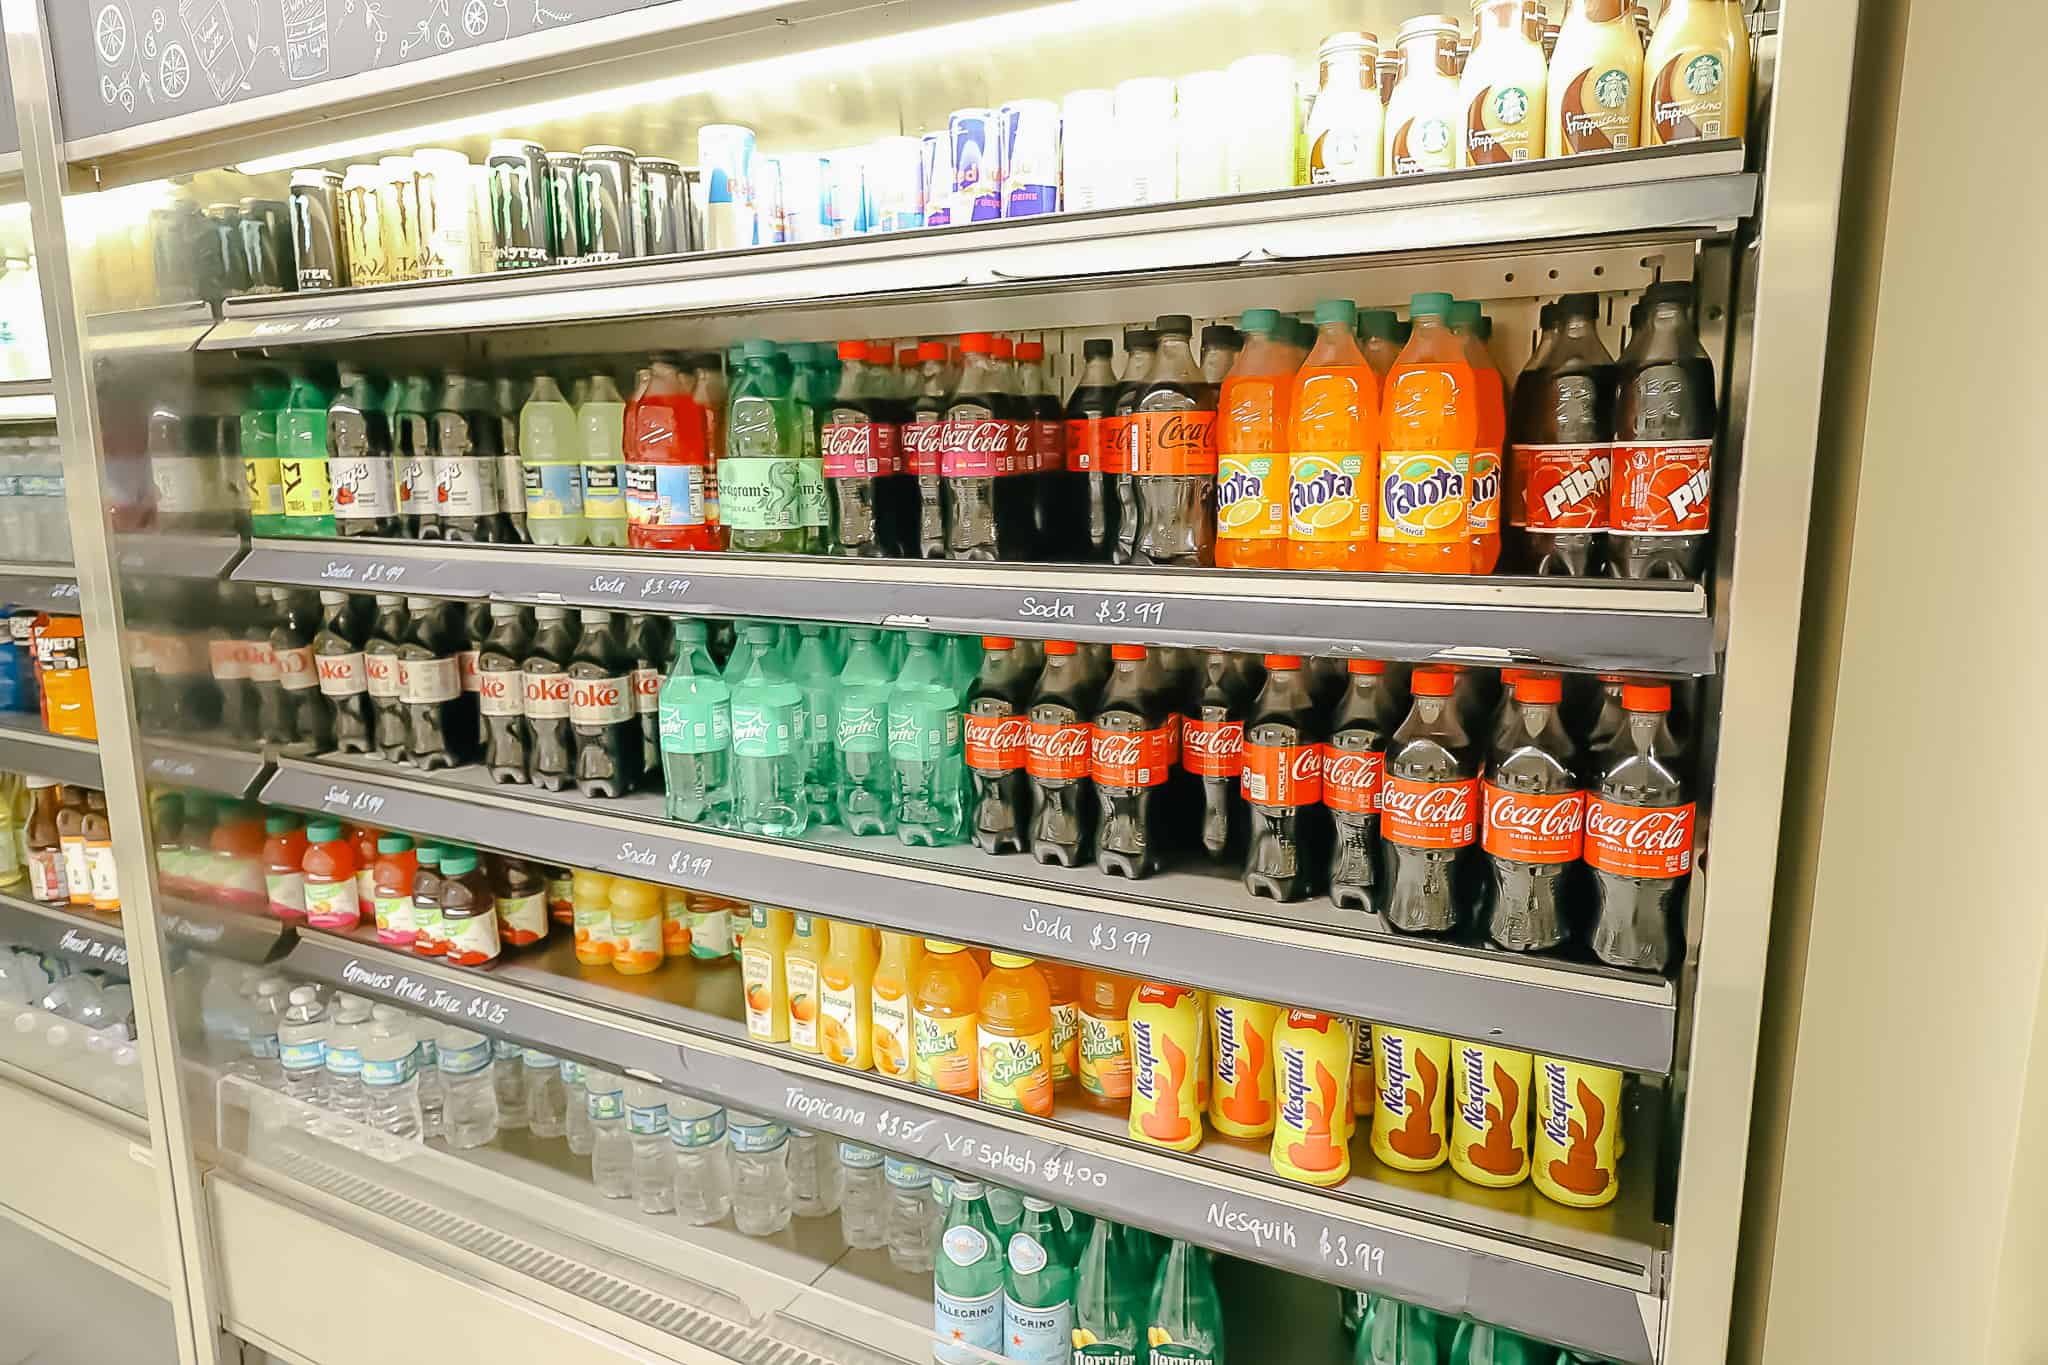 Coca-Cola products, Mr. Pibb, Minute Maid flavored beverages, Gingergale, Sprite, Nes-Quick 